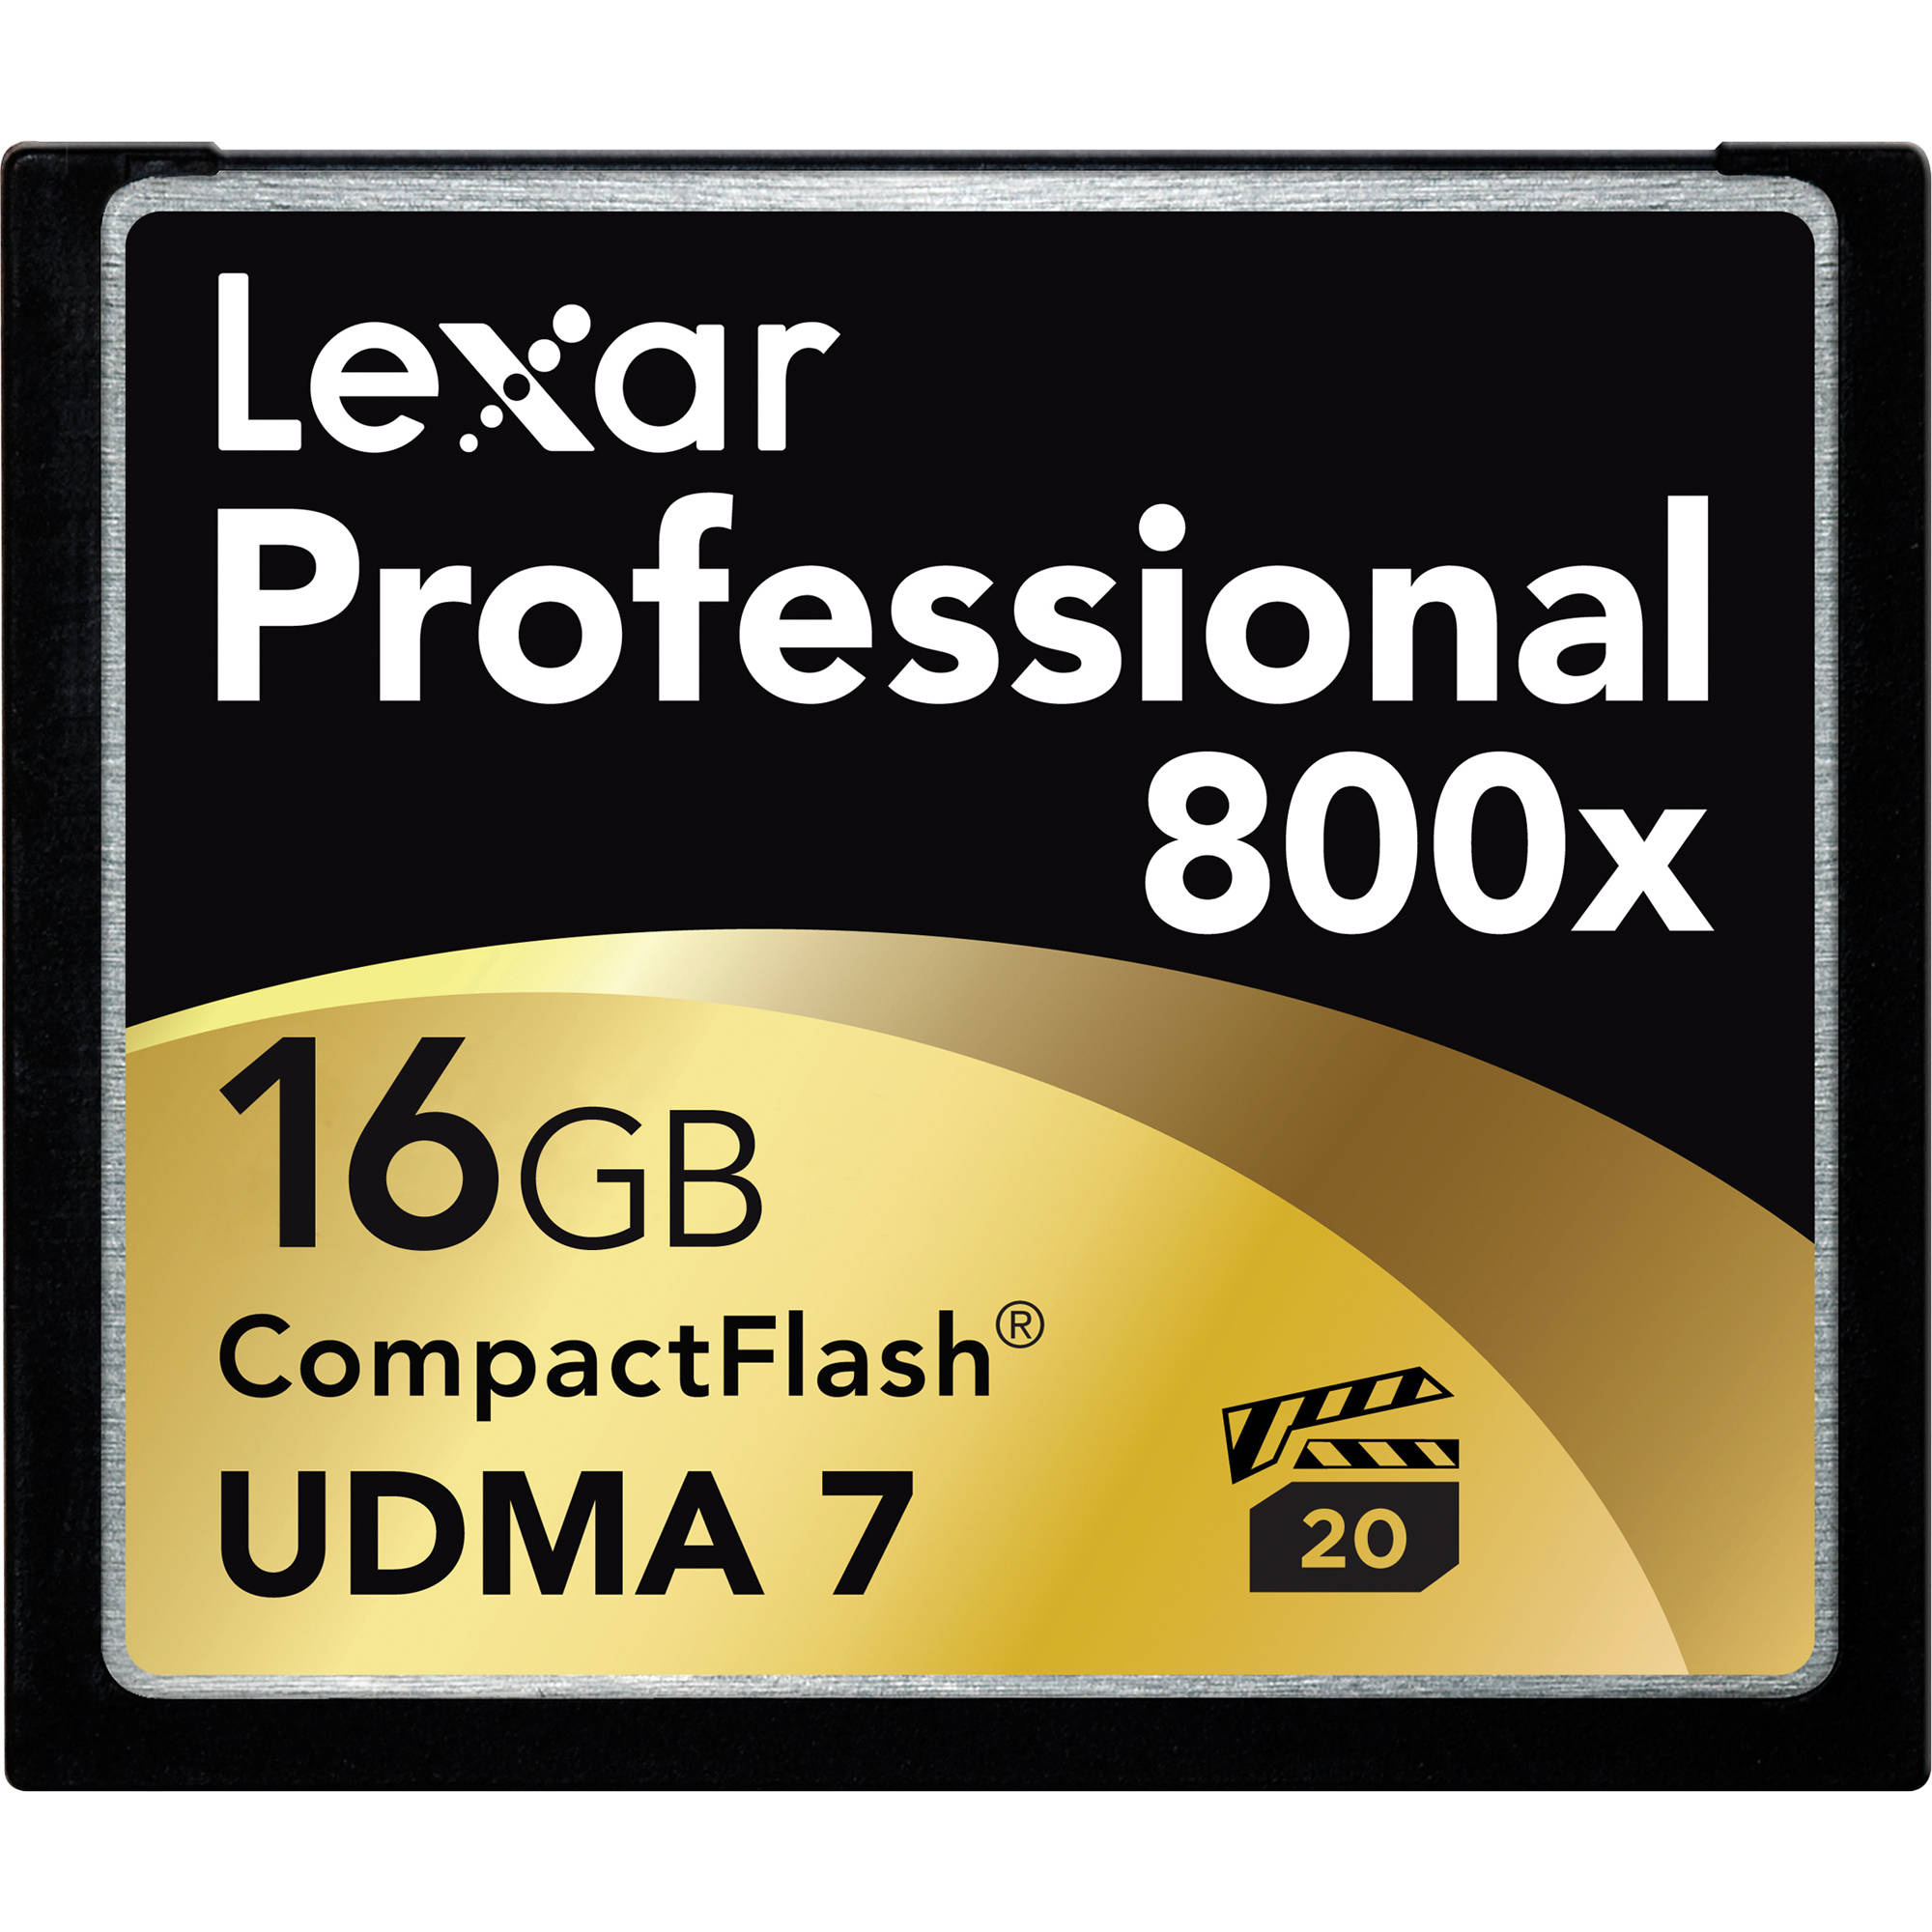 Lexar 16GB CompactFlash Memory Card Professional 800x UDMA